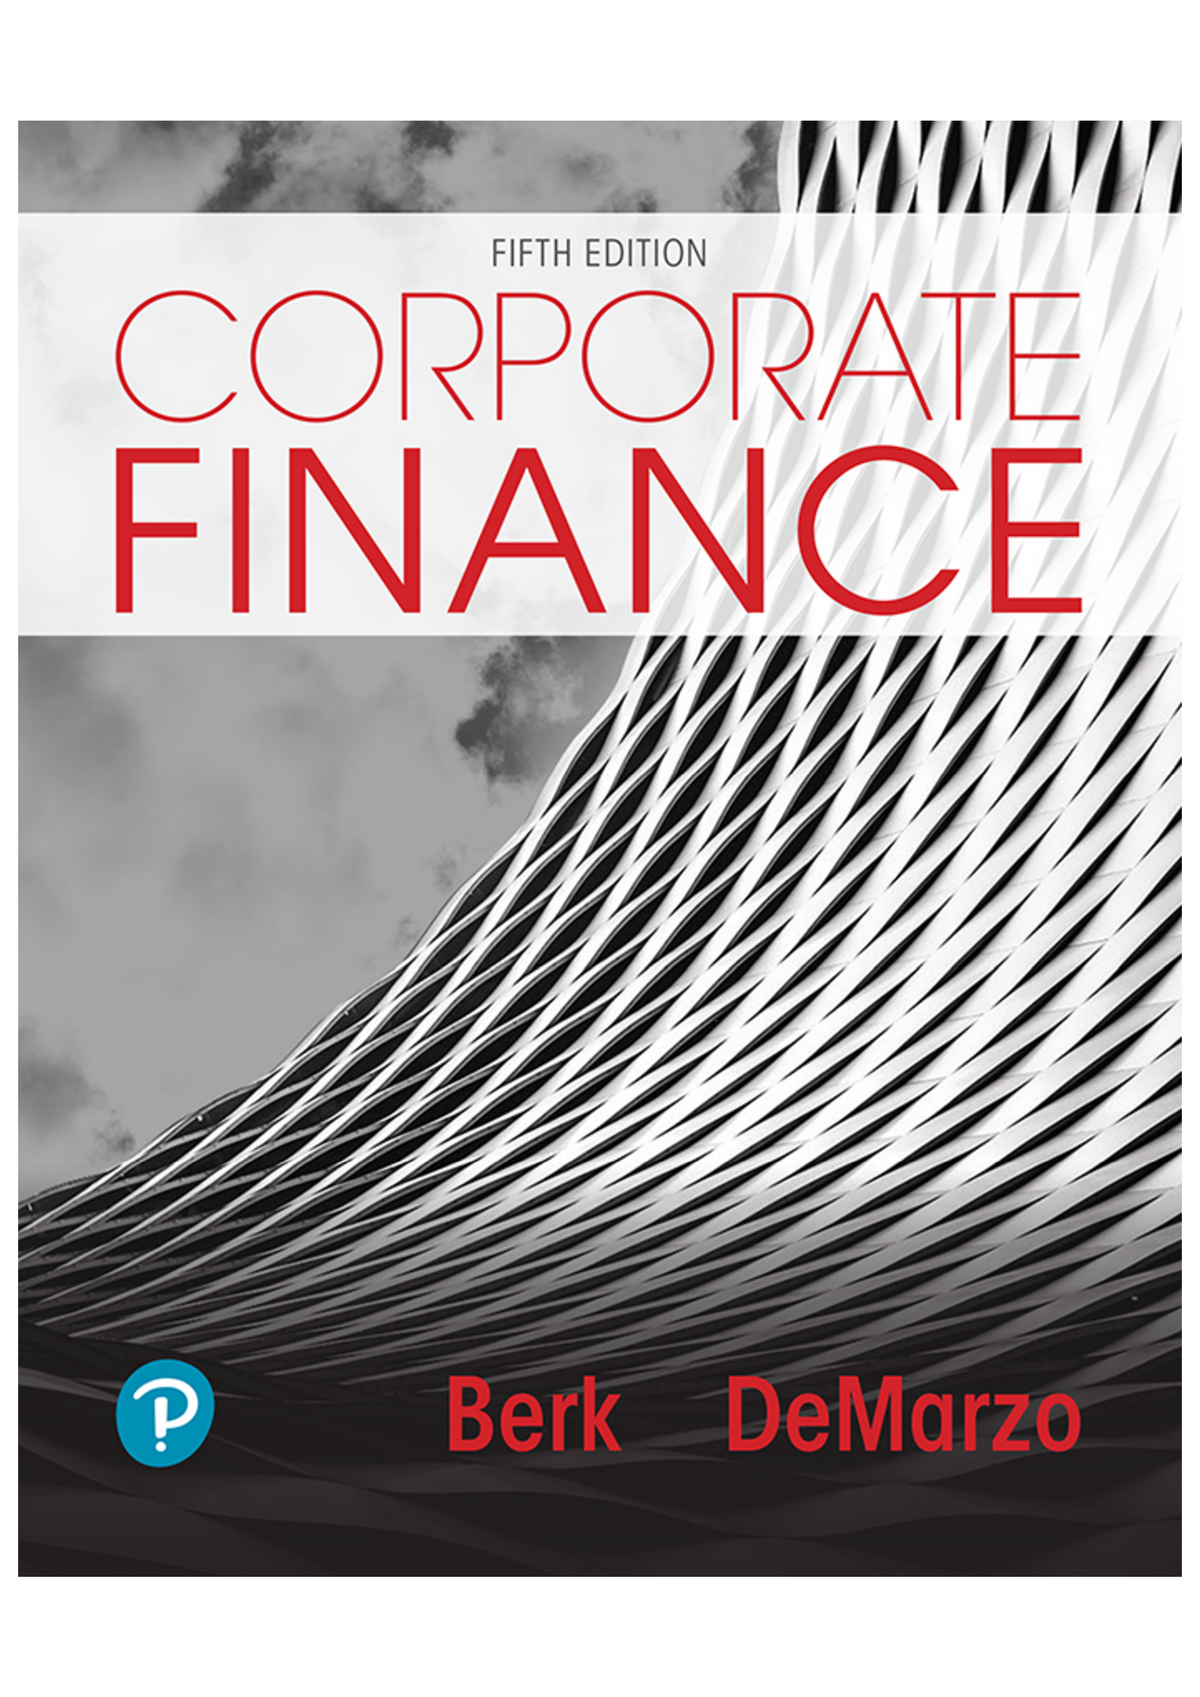 corporate-finance-5th-edition by JONATHAN BERK - COMMON SYMBOLS 